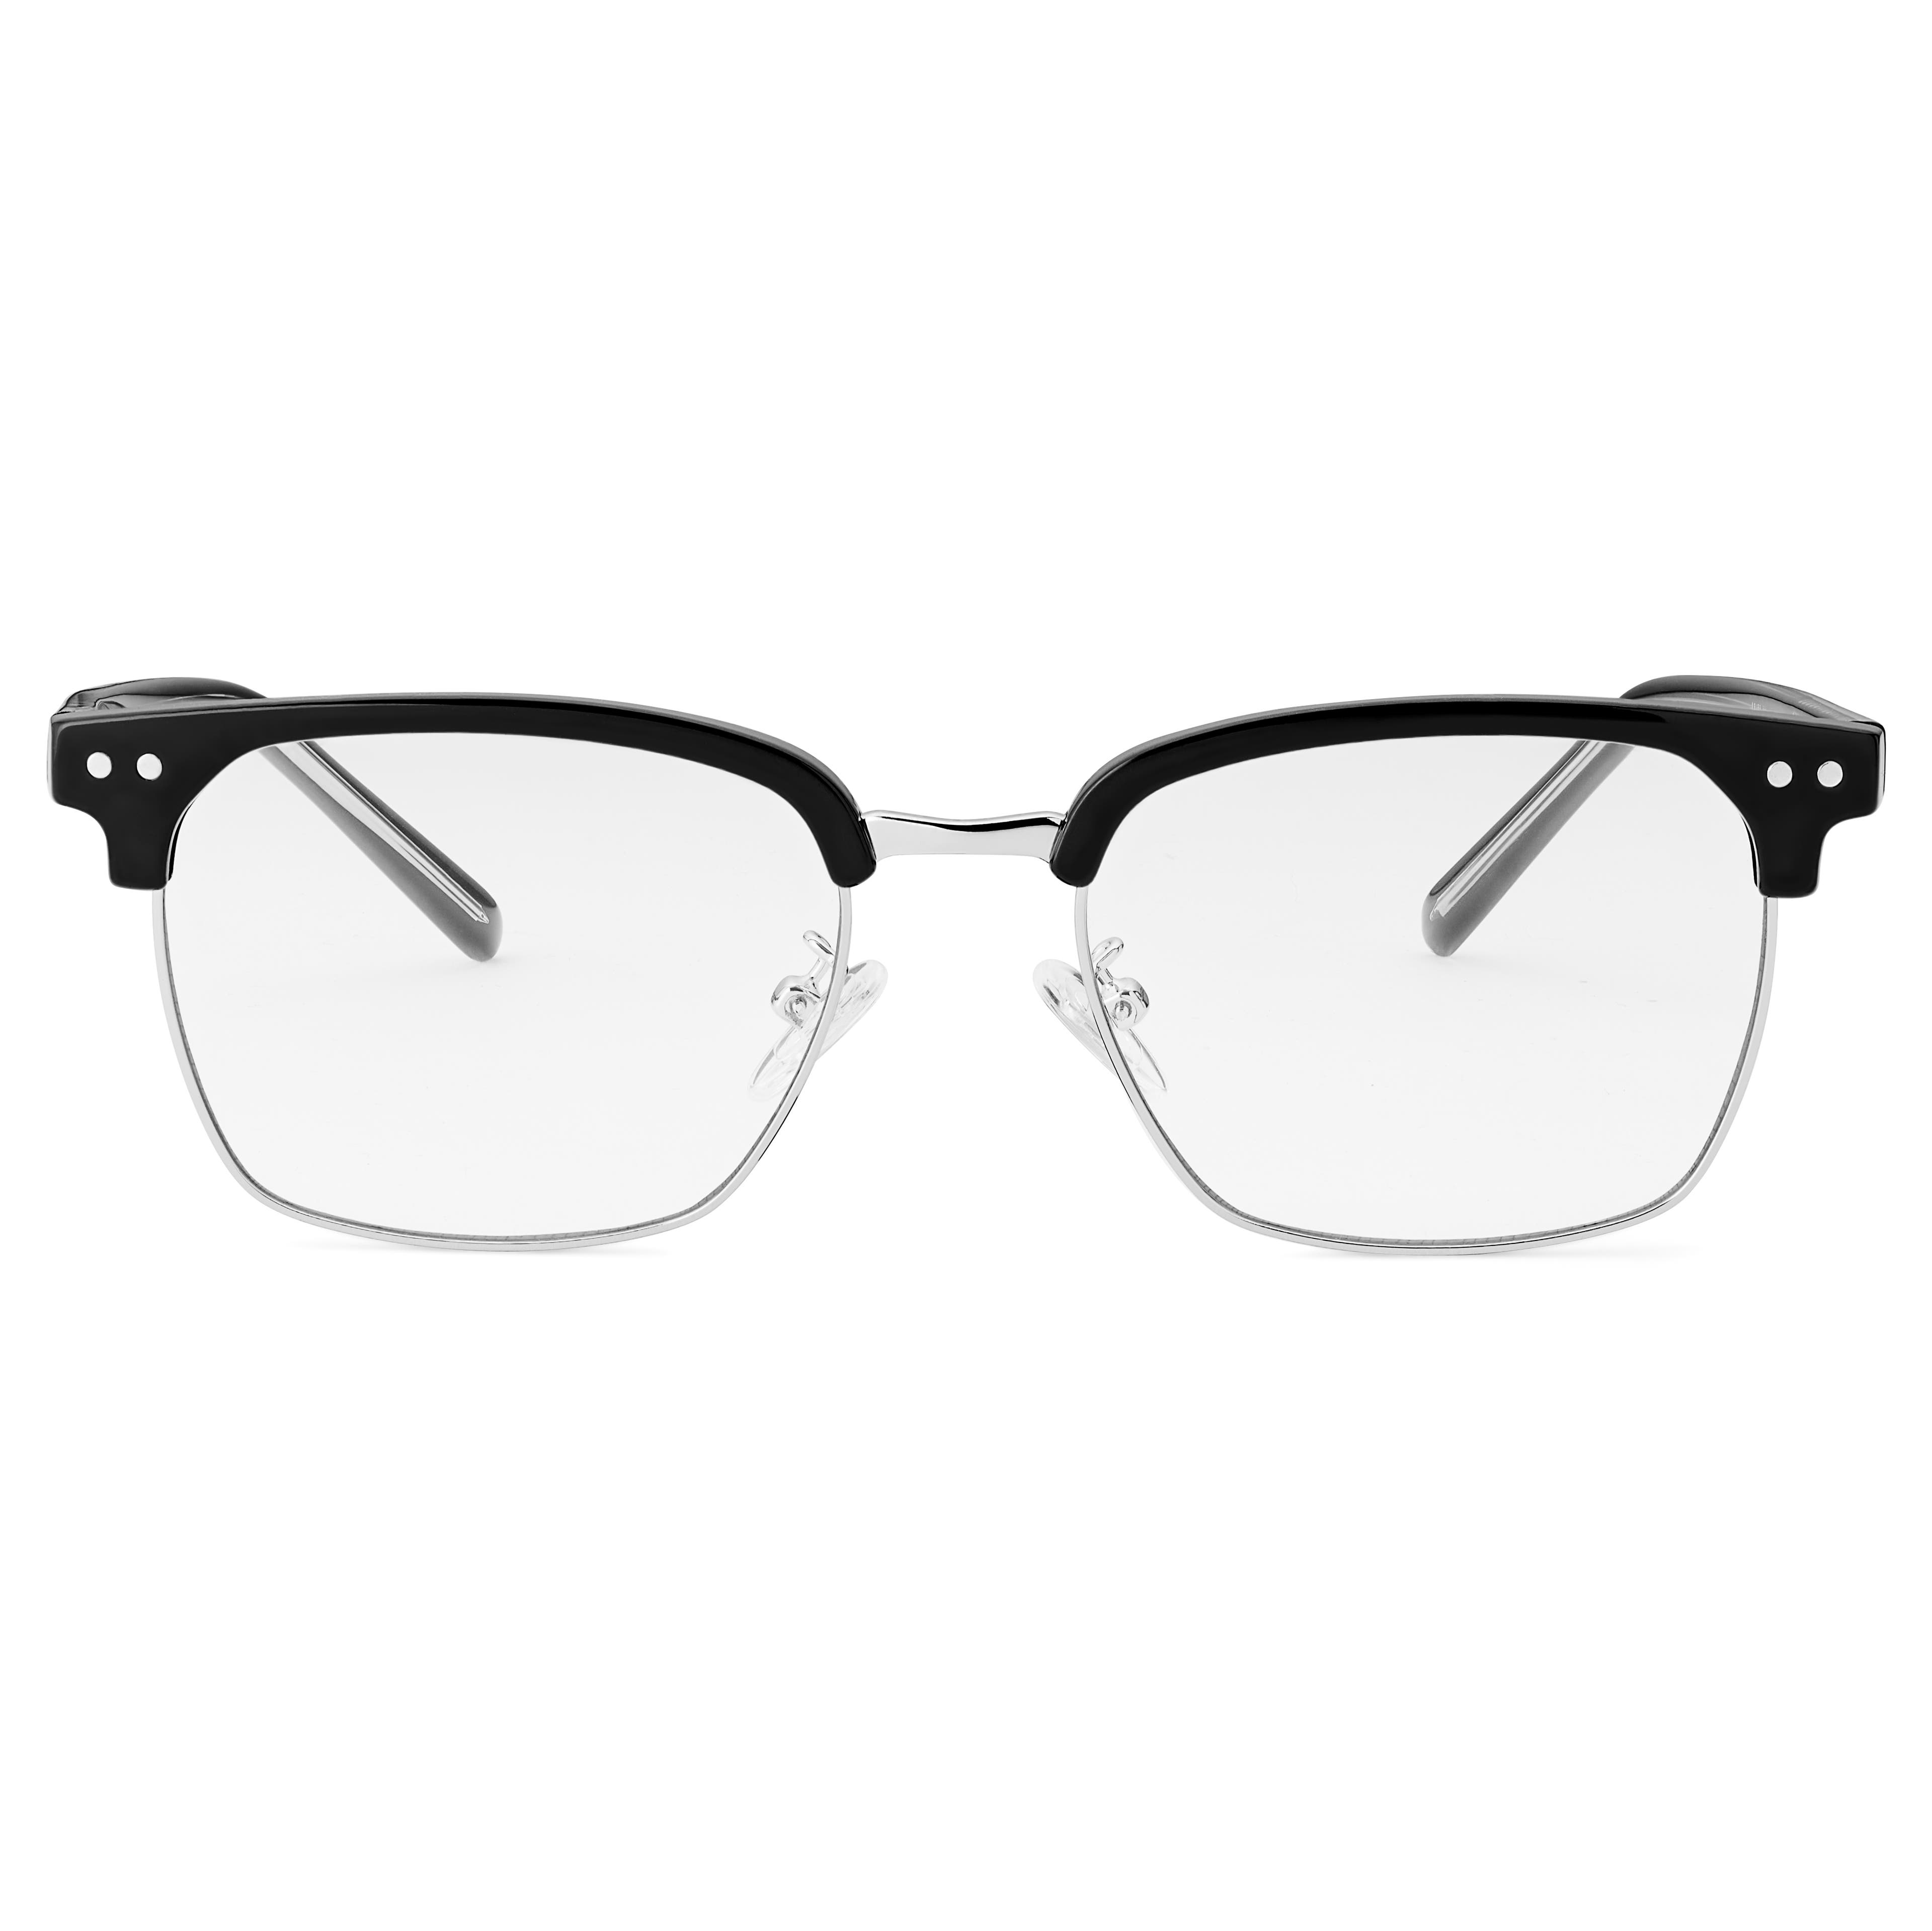 Clear lens glasses  26 Styles for men in stock